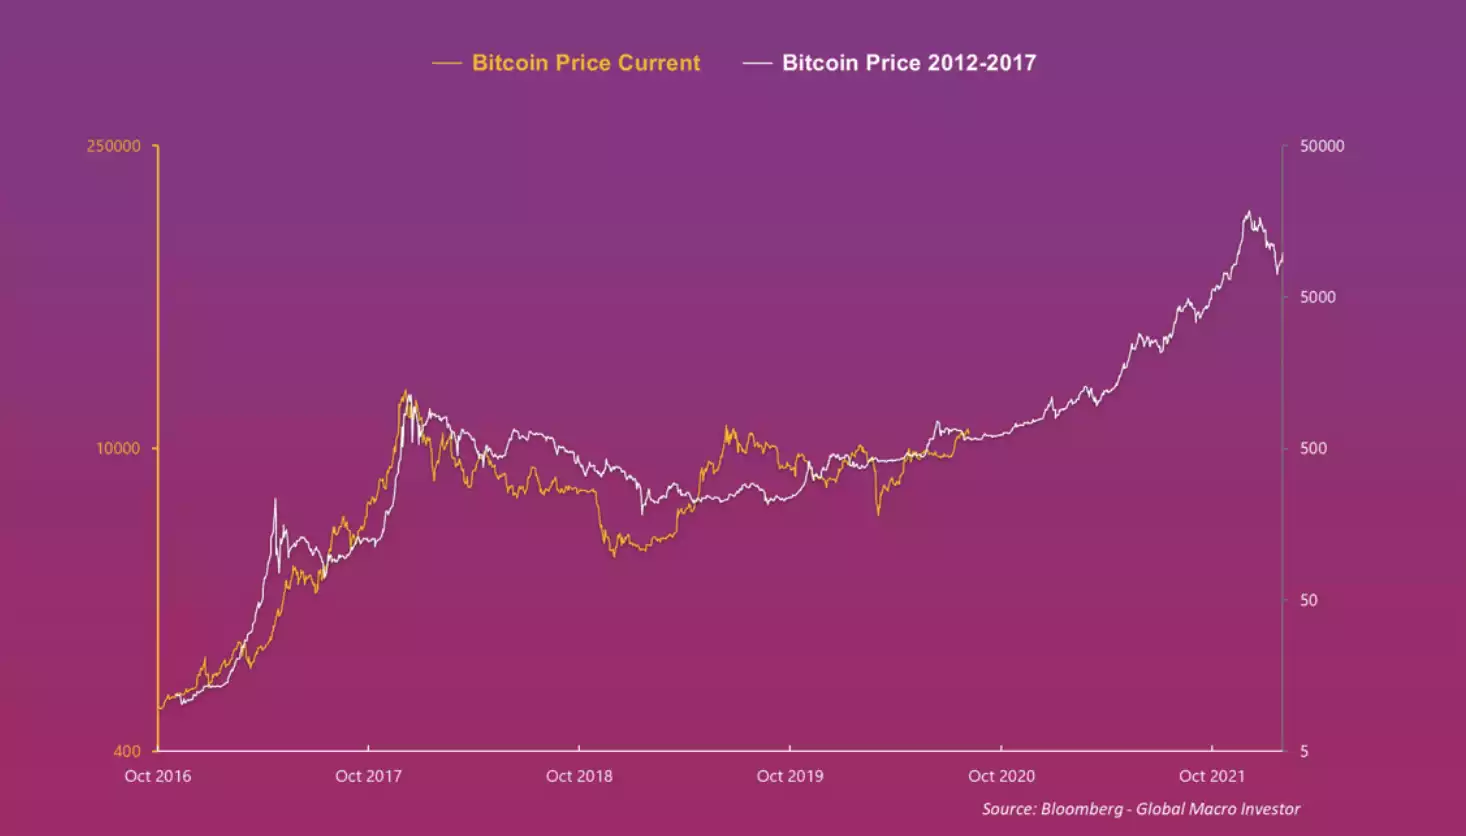 Bitcon Price Current